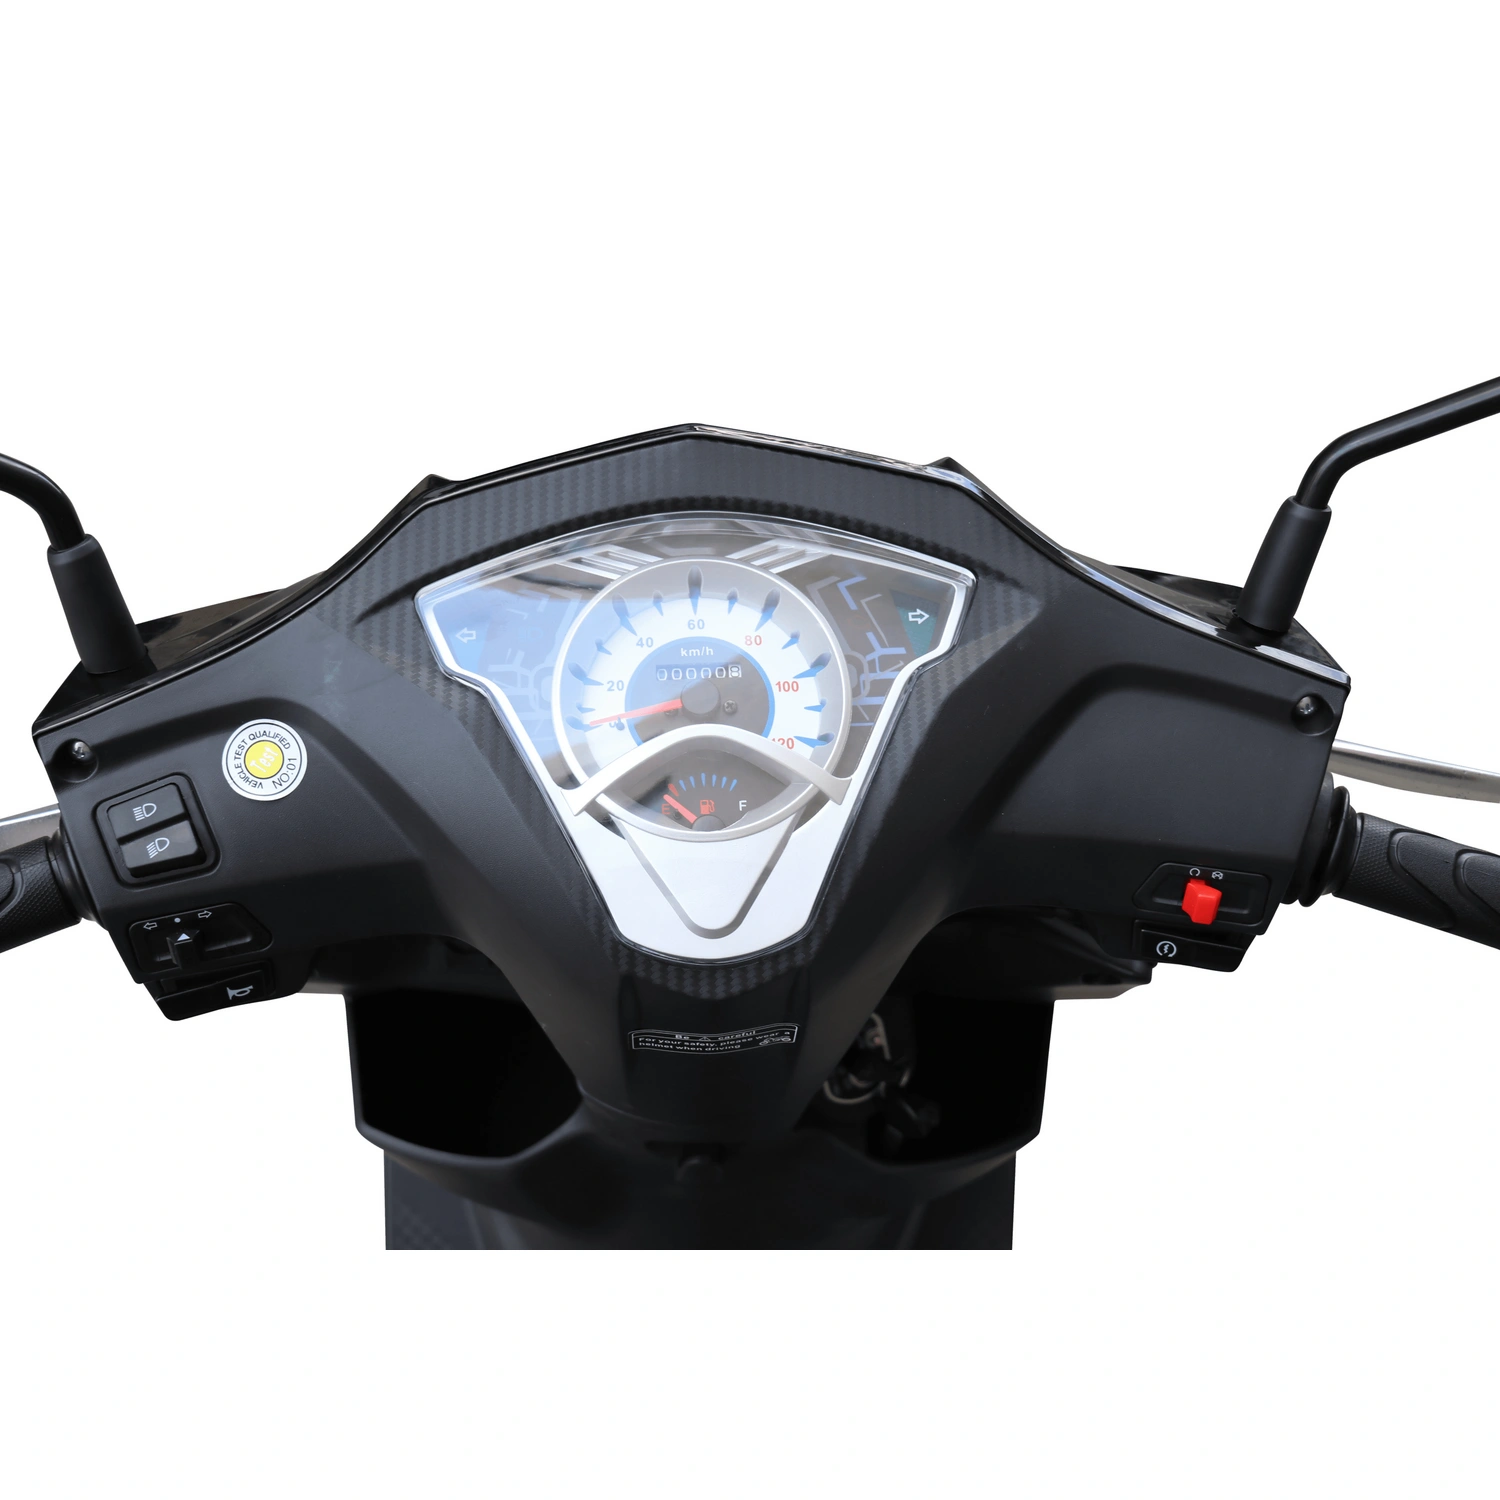 ALPHA MOTORS Motorroller «, 85 »Topdrive 125 cm³, 5 km/h, Euro